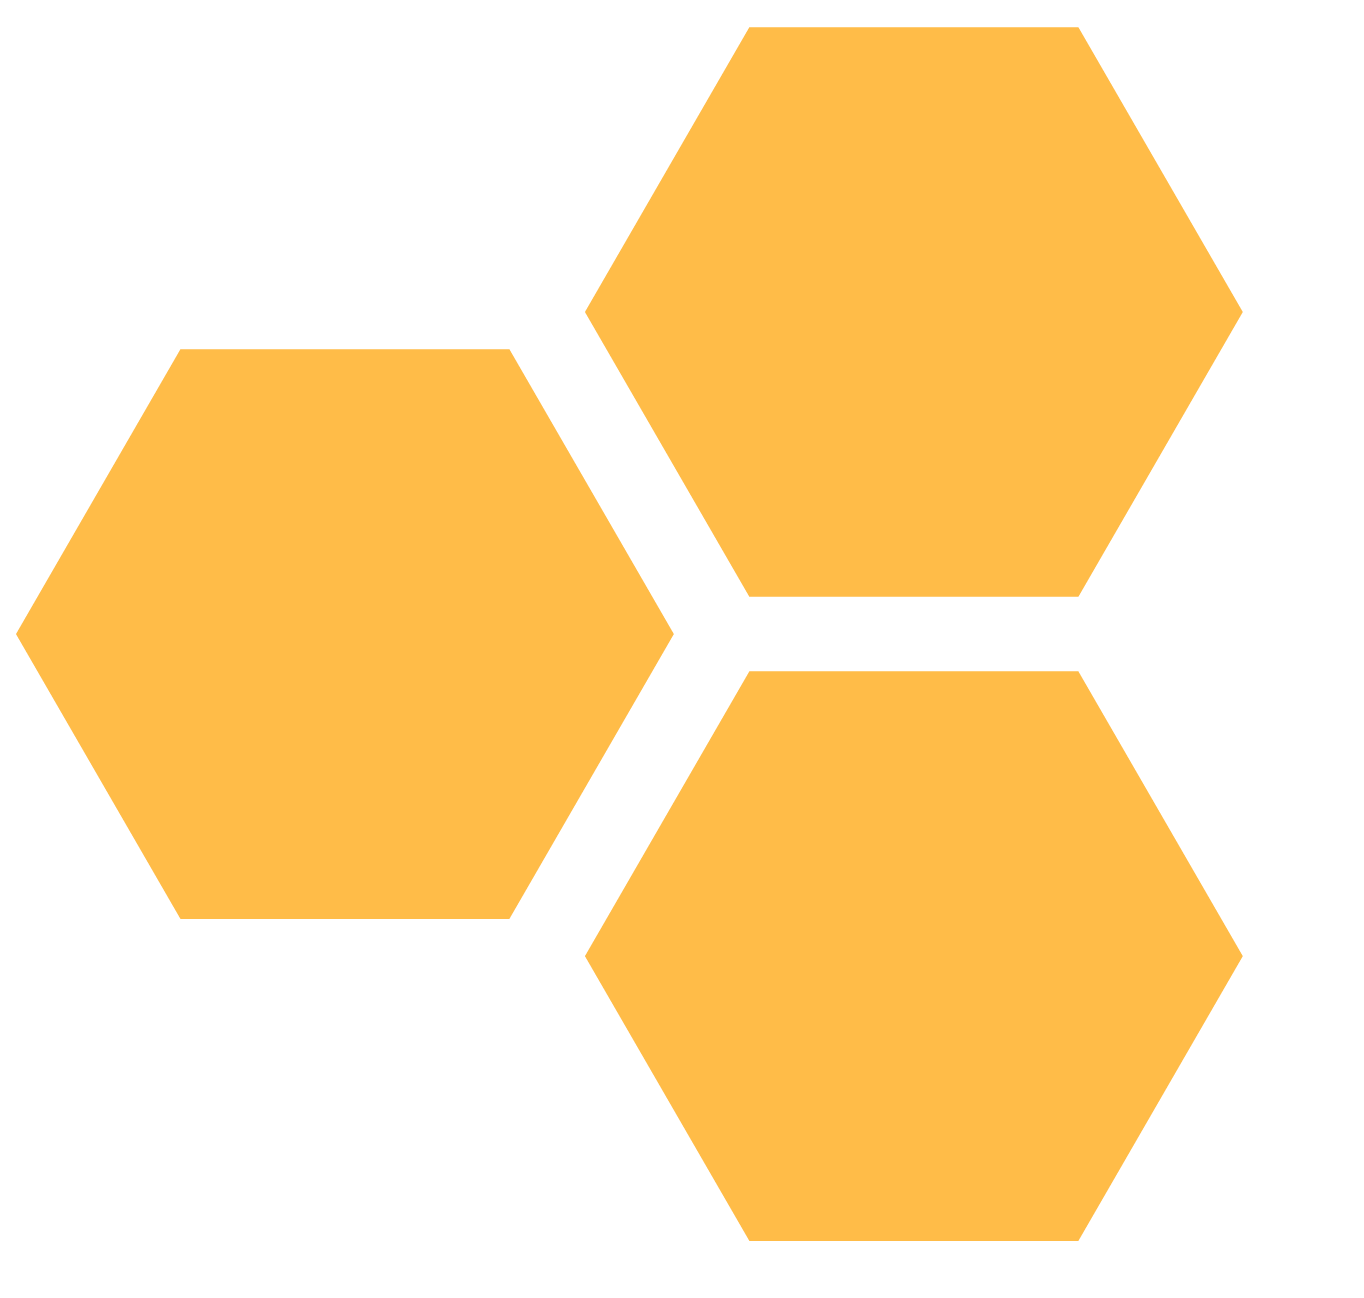 icon that represents HexaHive's core values